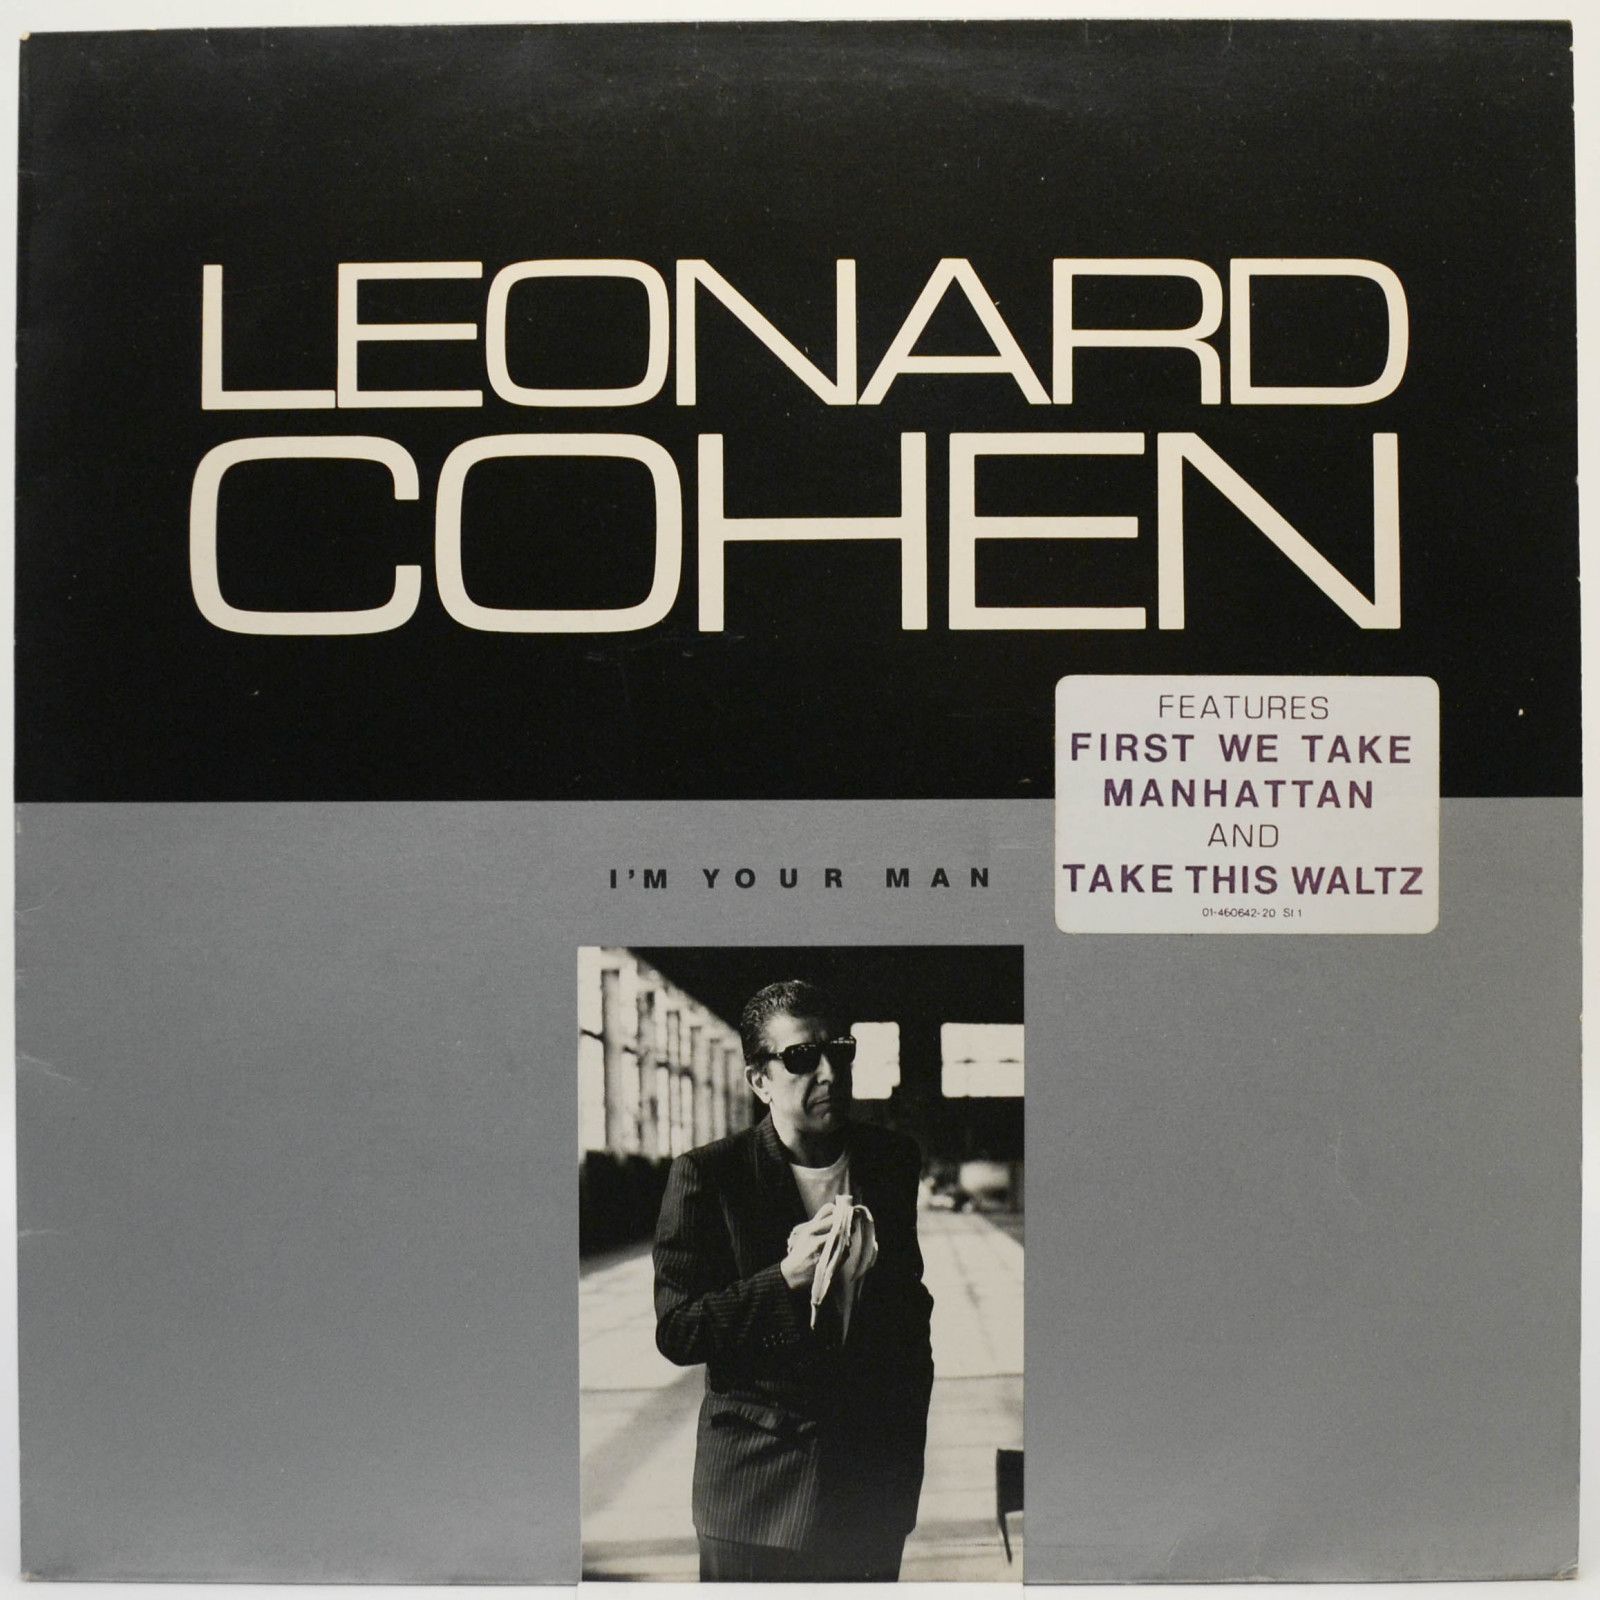 Leonard Cohen — I'm Your Man, 1988